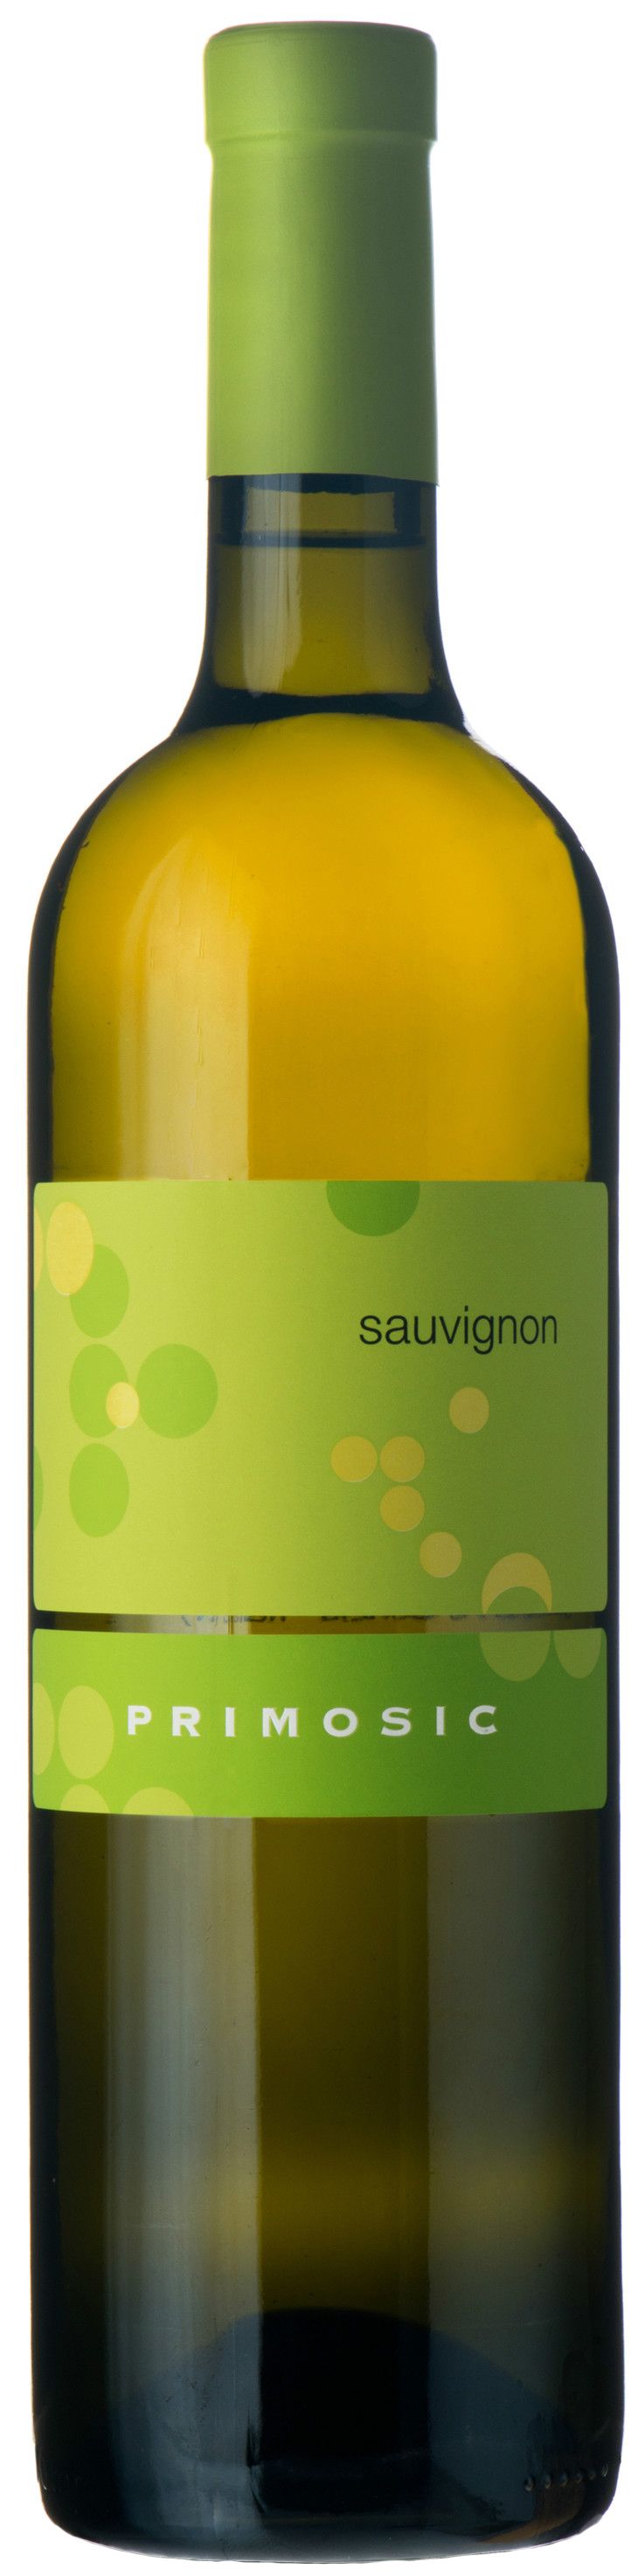 Primosic, Sauvignon Blanc, 2012